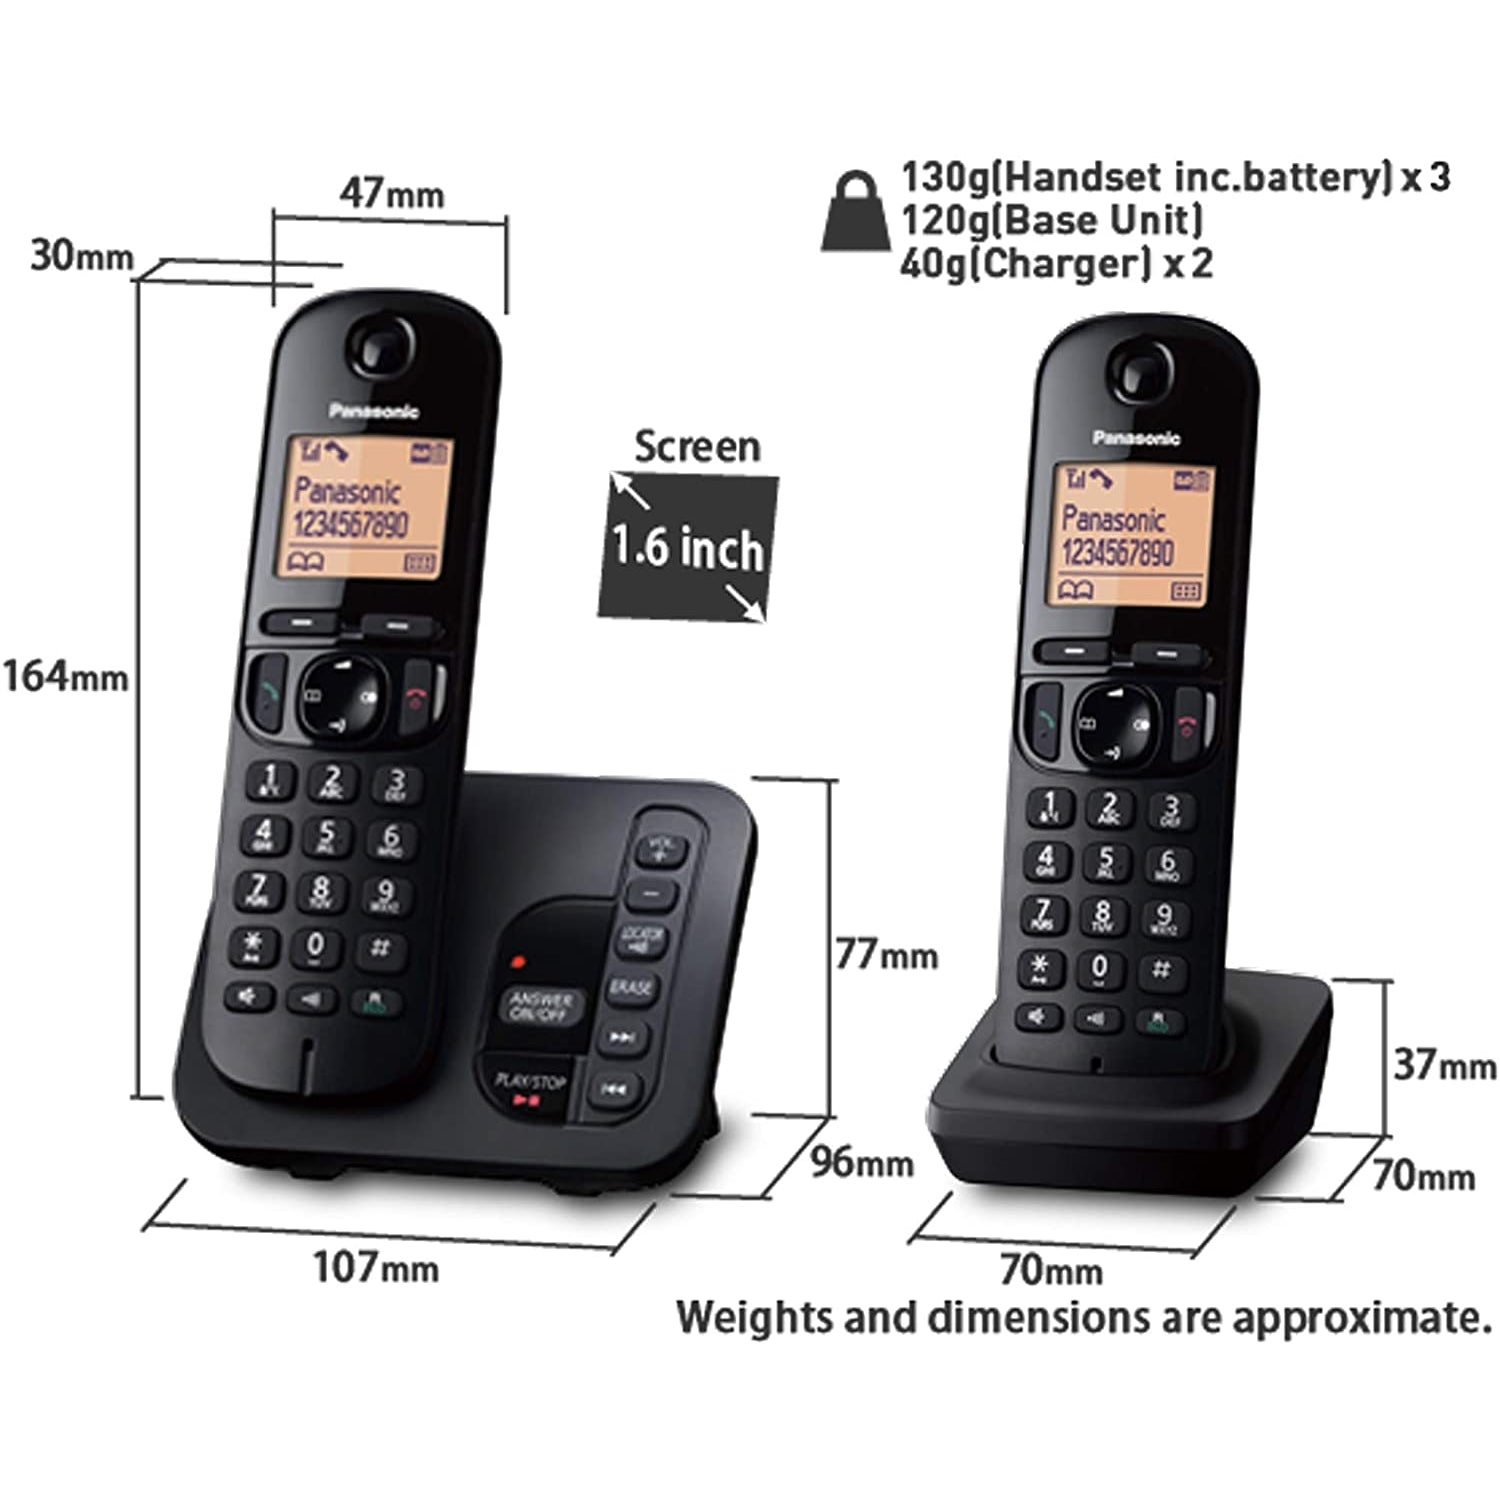 Panasonic KX-TGC223EB DECT Cordless Phone with Answering Machine - Trio - Refurbished Excellent